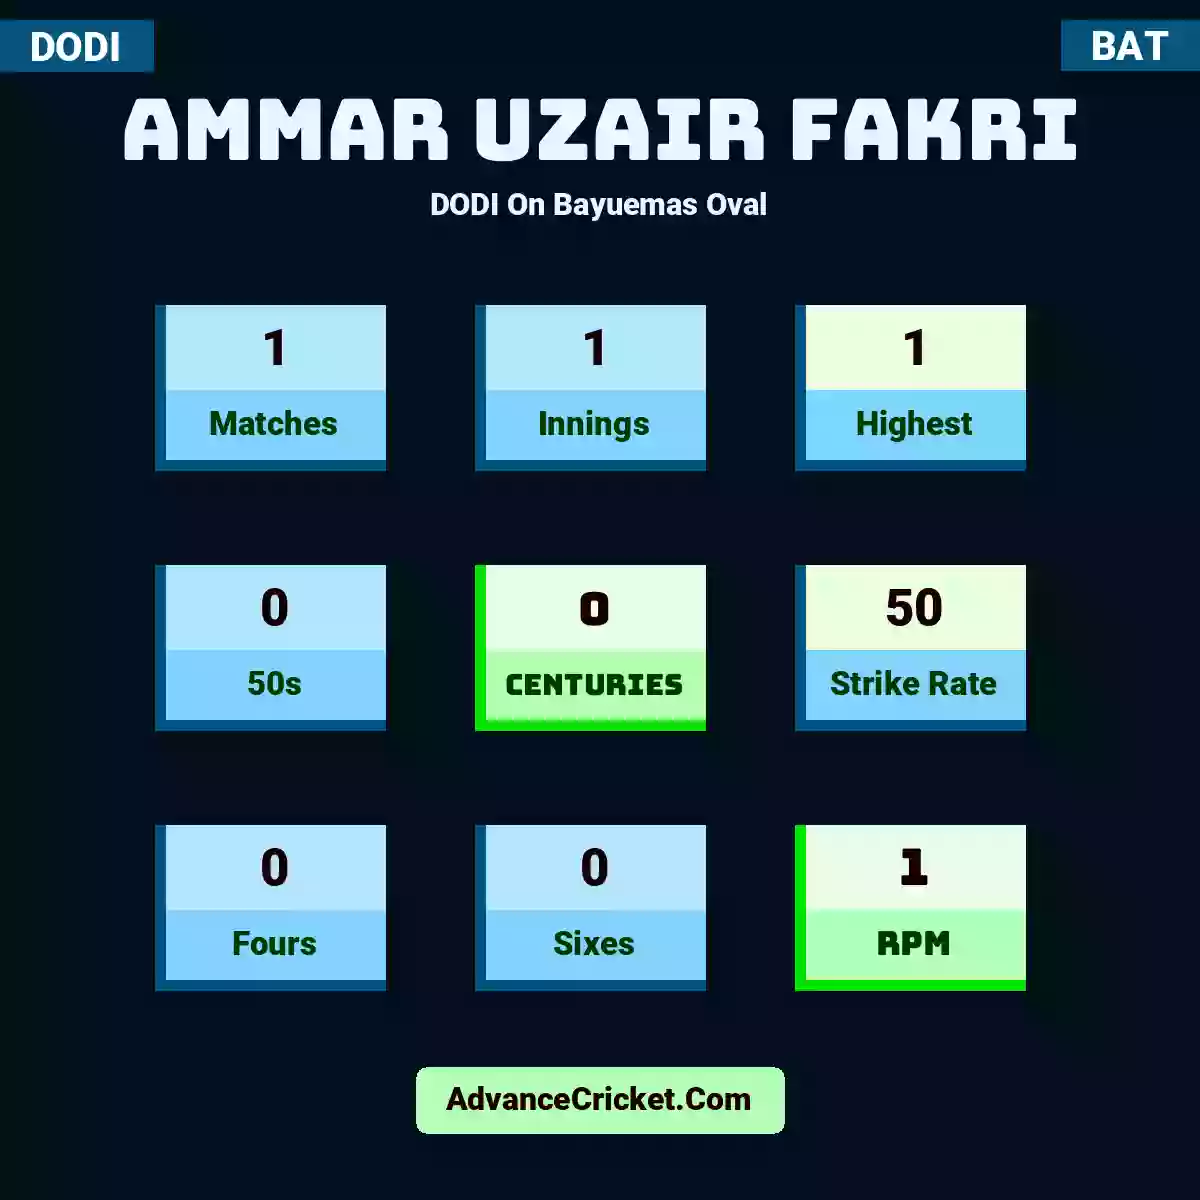 Ammar Uzair Fakri DODI  On Bayuemas Oval, Ammar Uzair Fakri played 1 matches, scored 1 runs as highest, 0 half-centuries, and 0 centuries, with a strike rate of 50. A.Uzair.Fakri hit 0 fours and 0 sixes, with an RPM of 1.